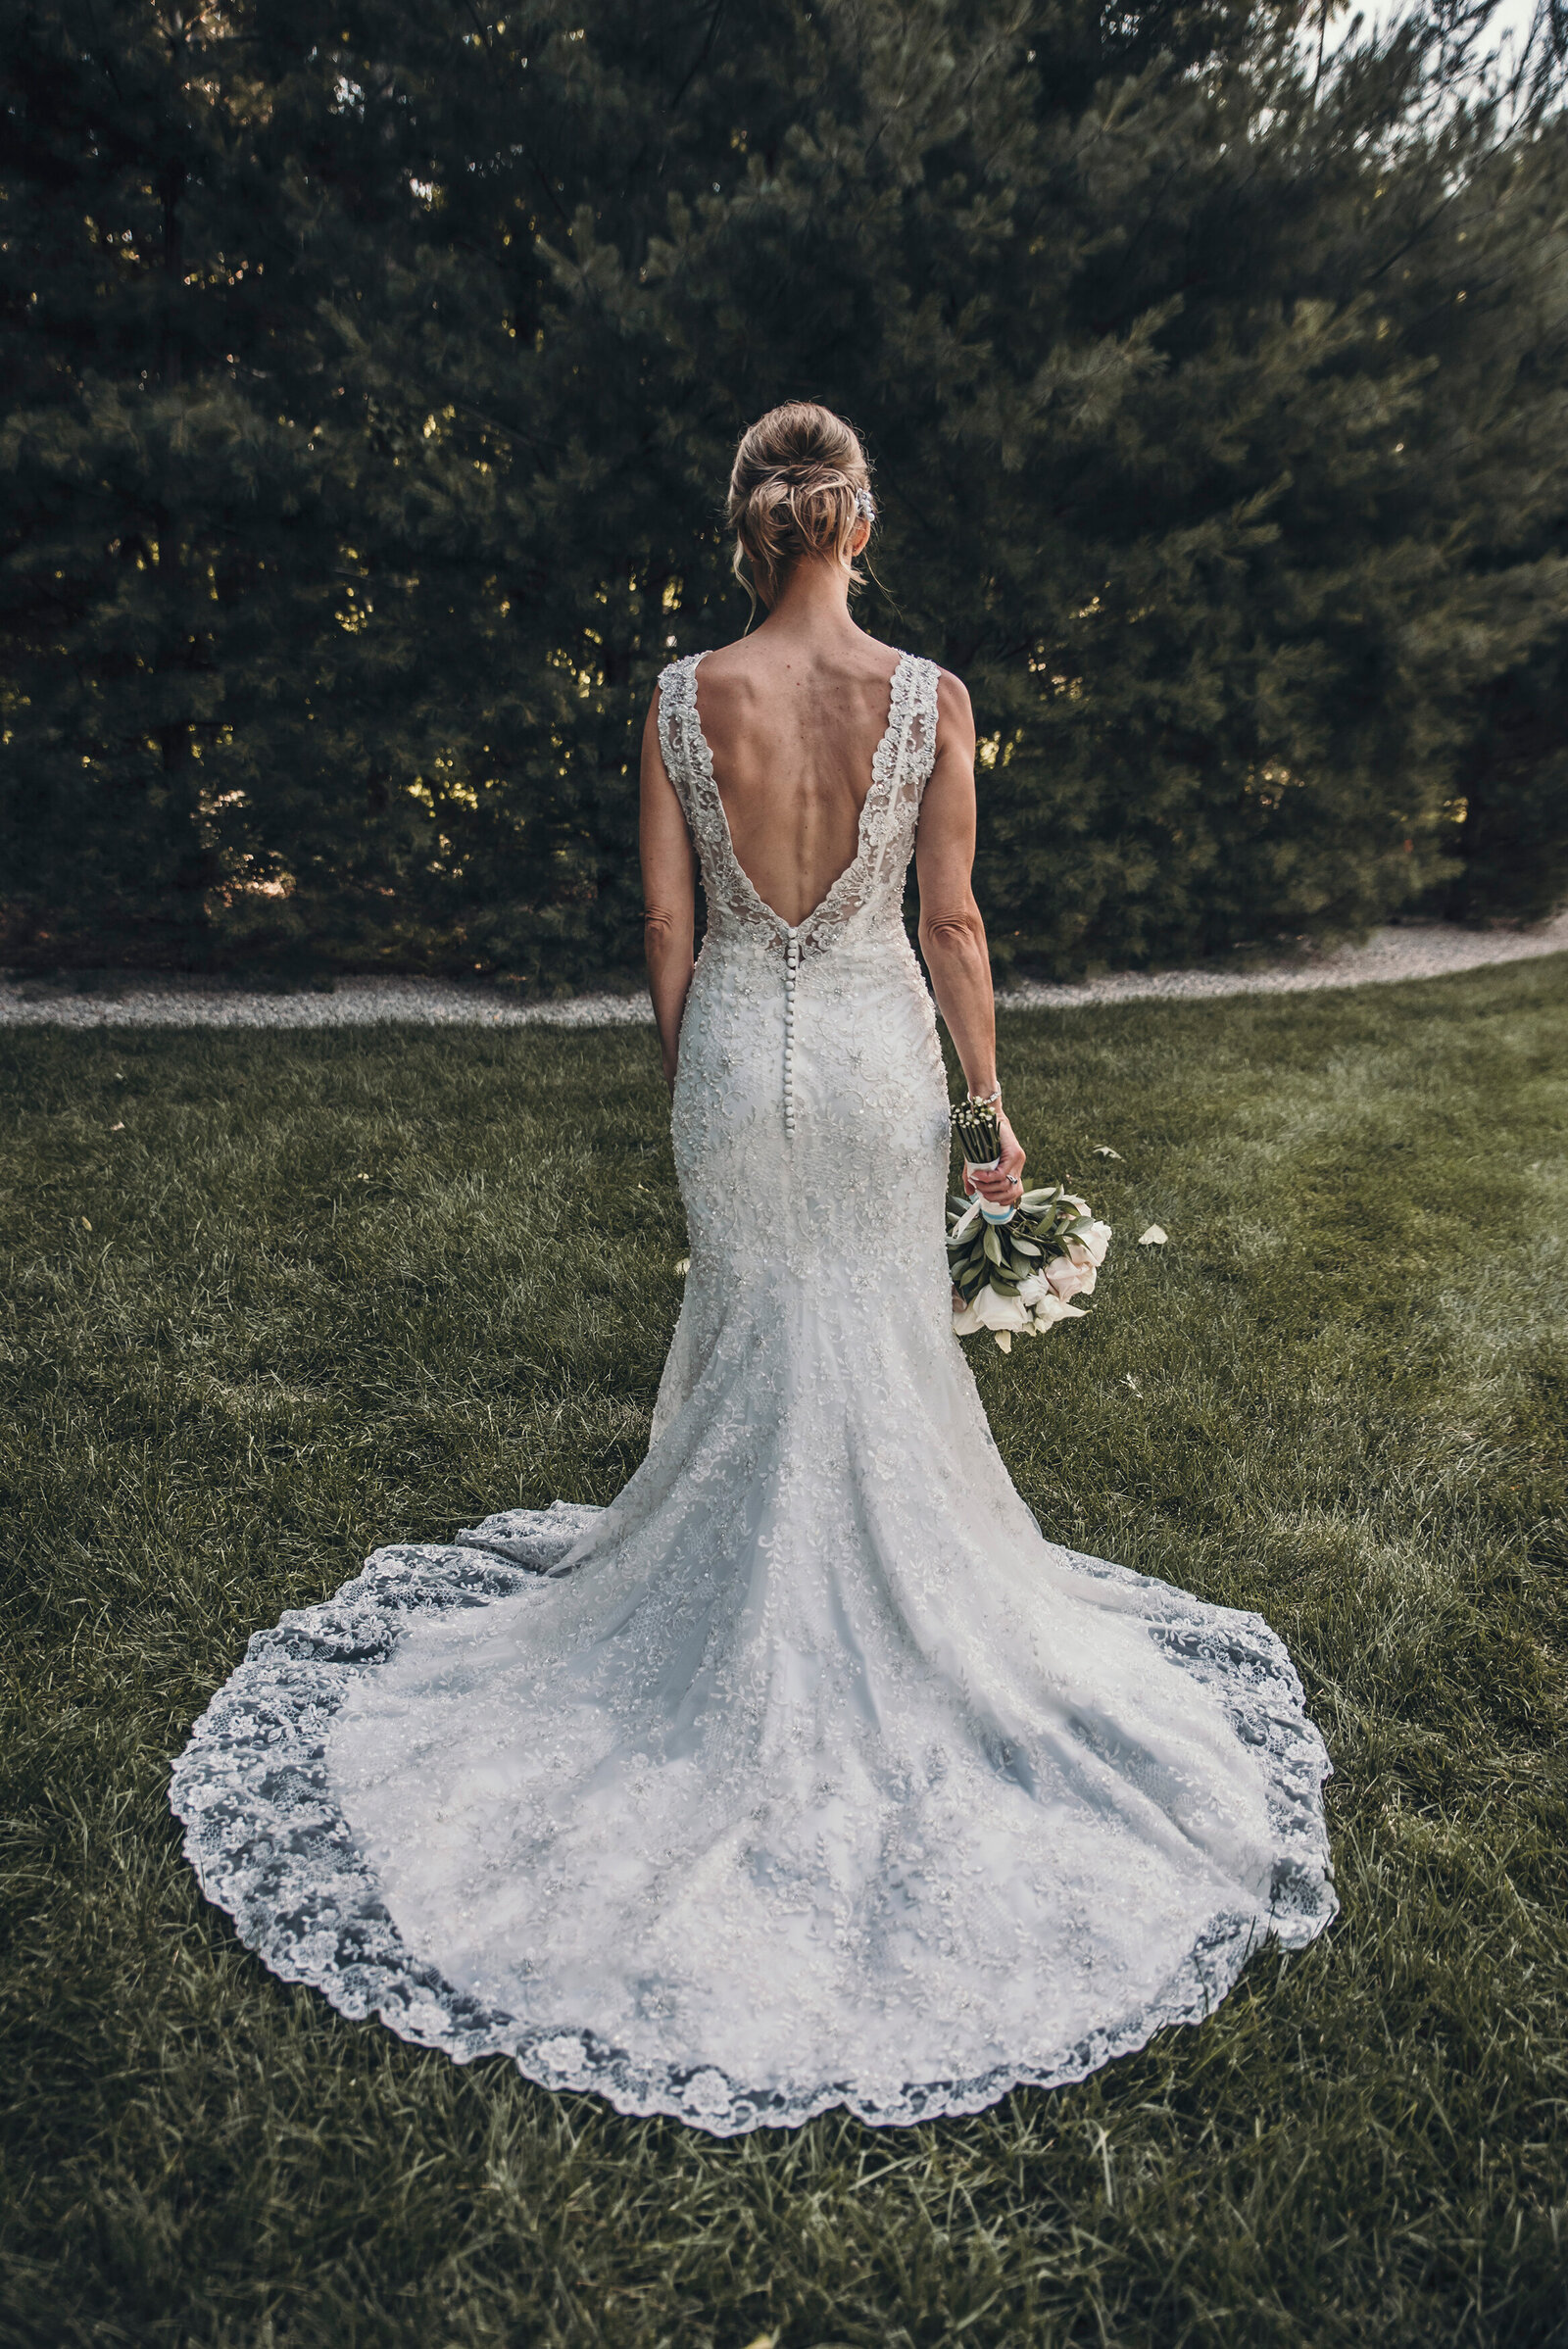 Connecticut-Wedding-Photographer-012